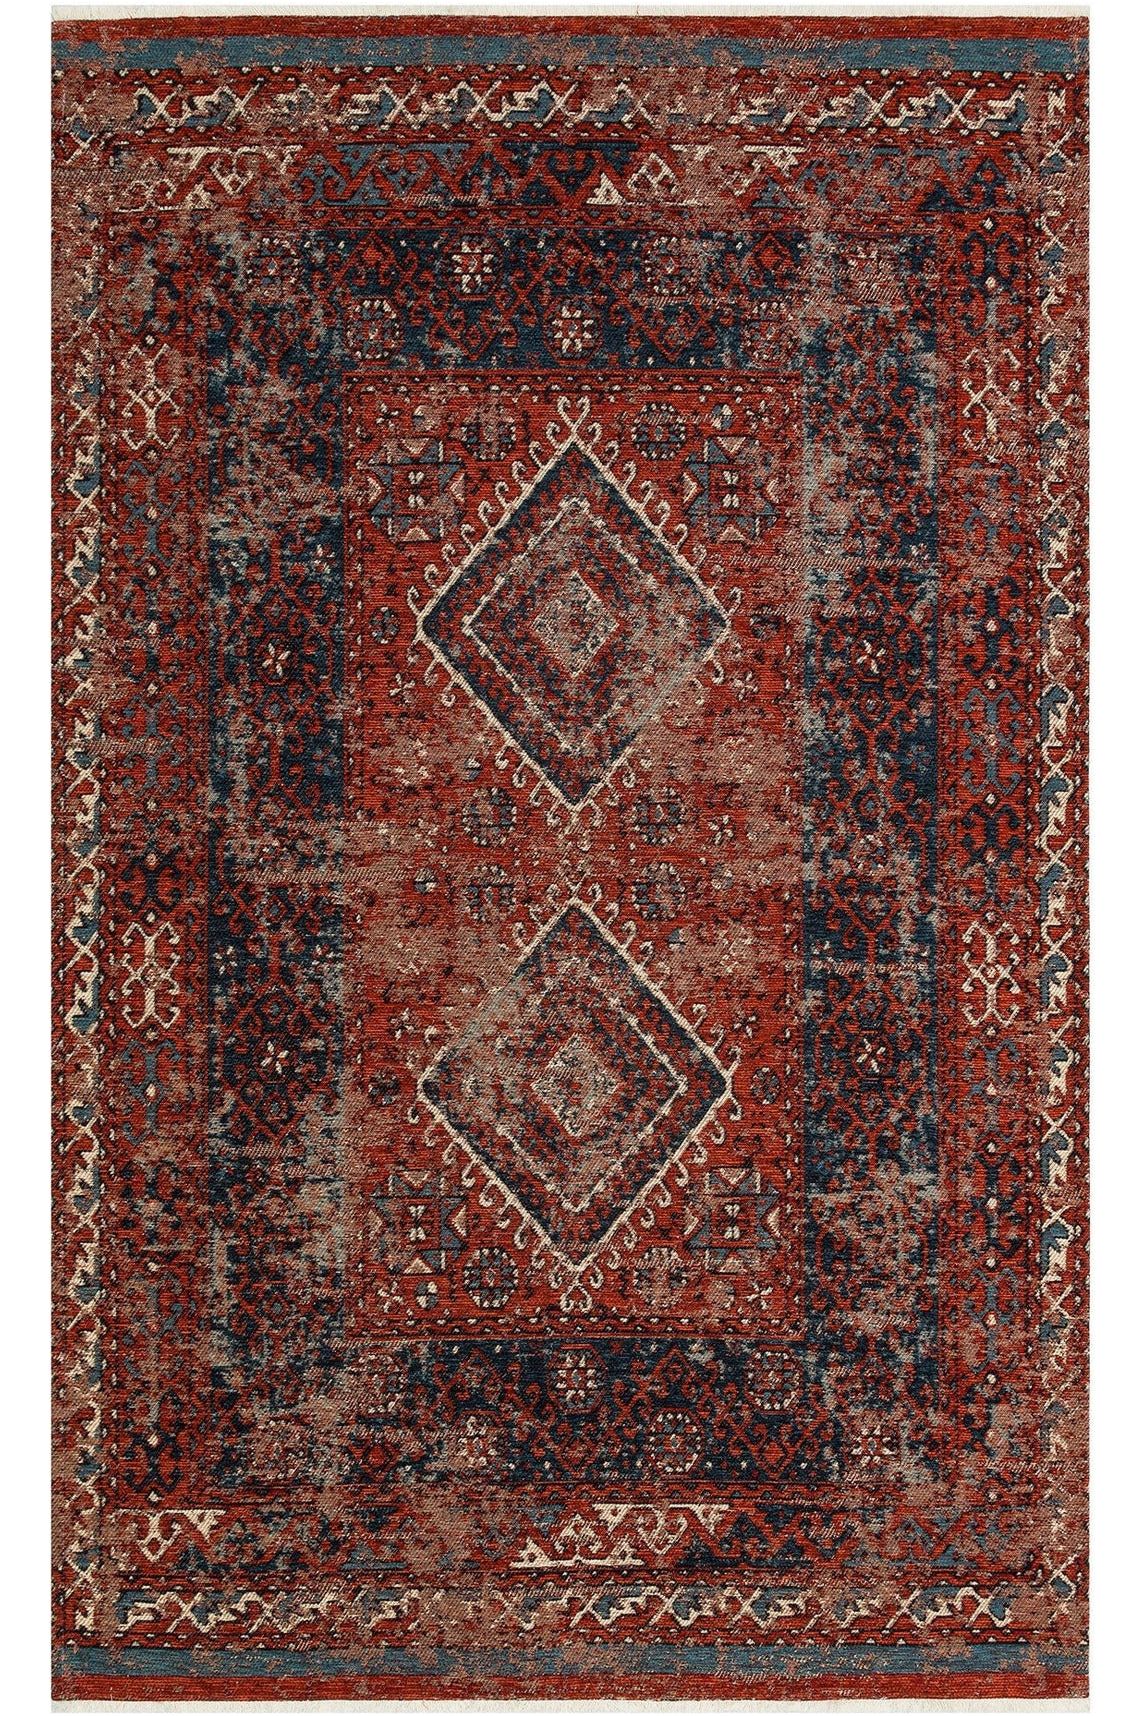 #Turkish_Carpets_Rugs# #Modern_Carpets# #Abrash_Carpets#And 02 Multy